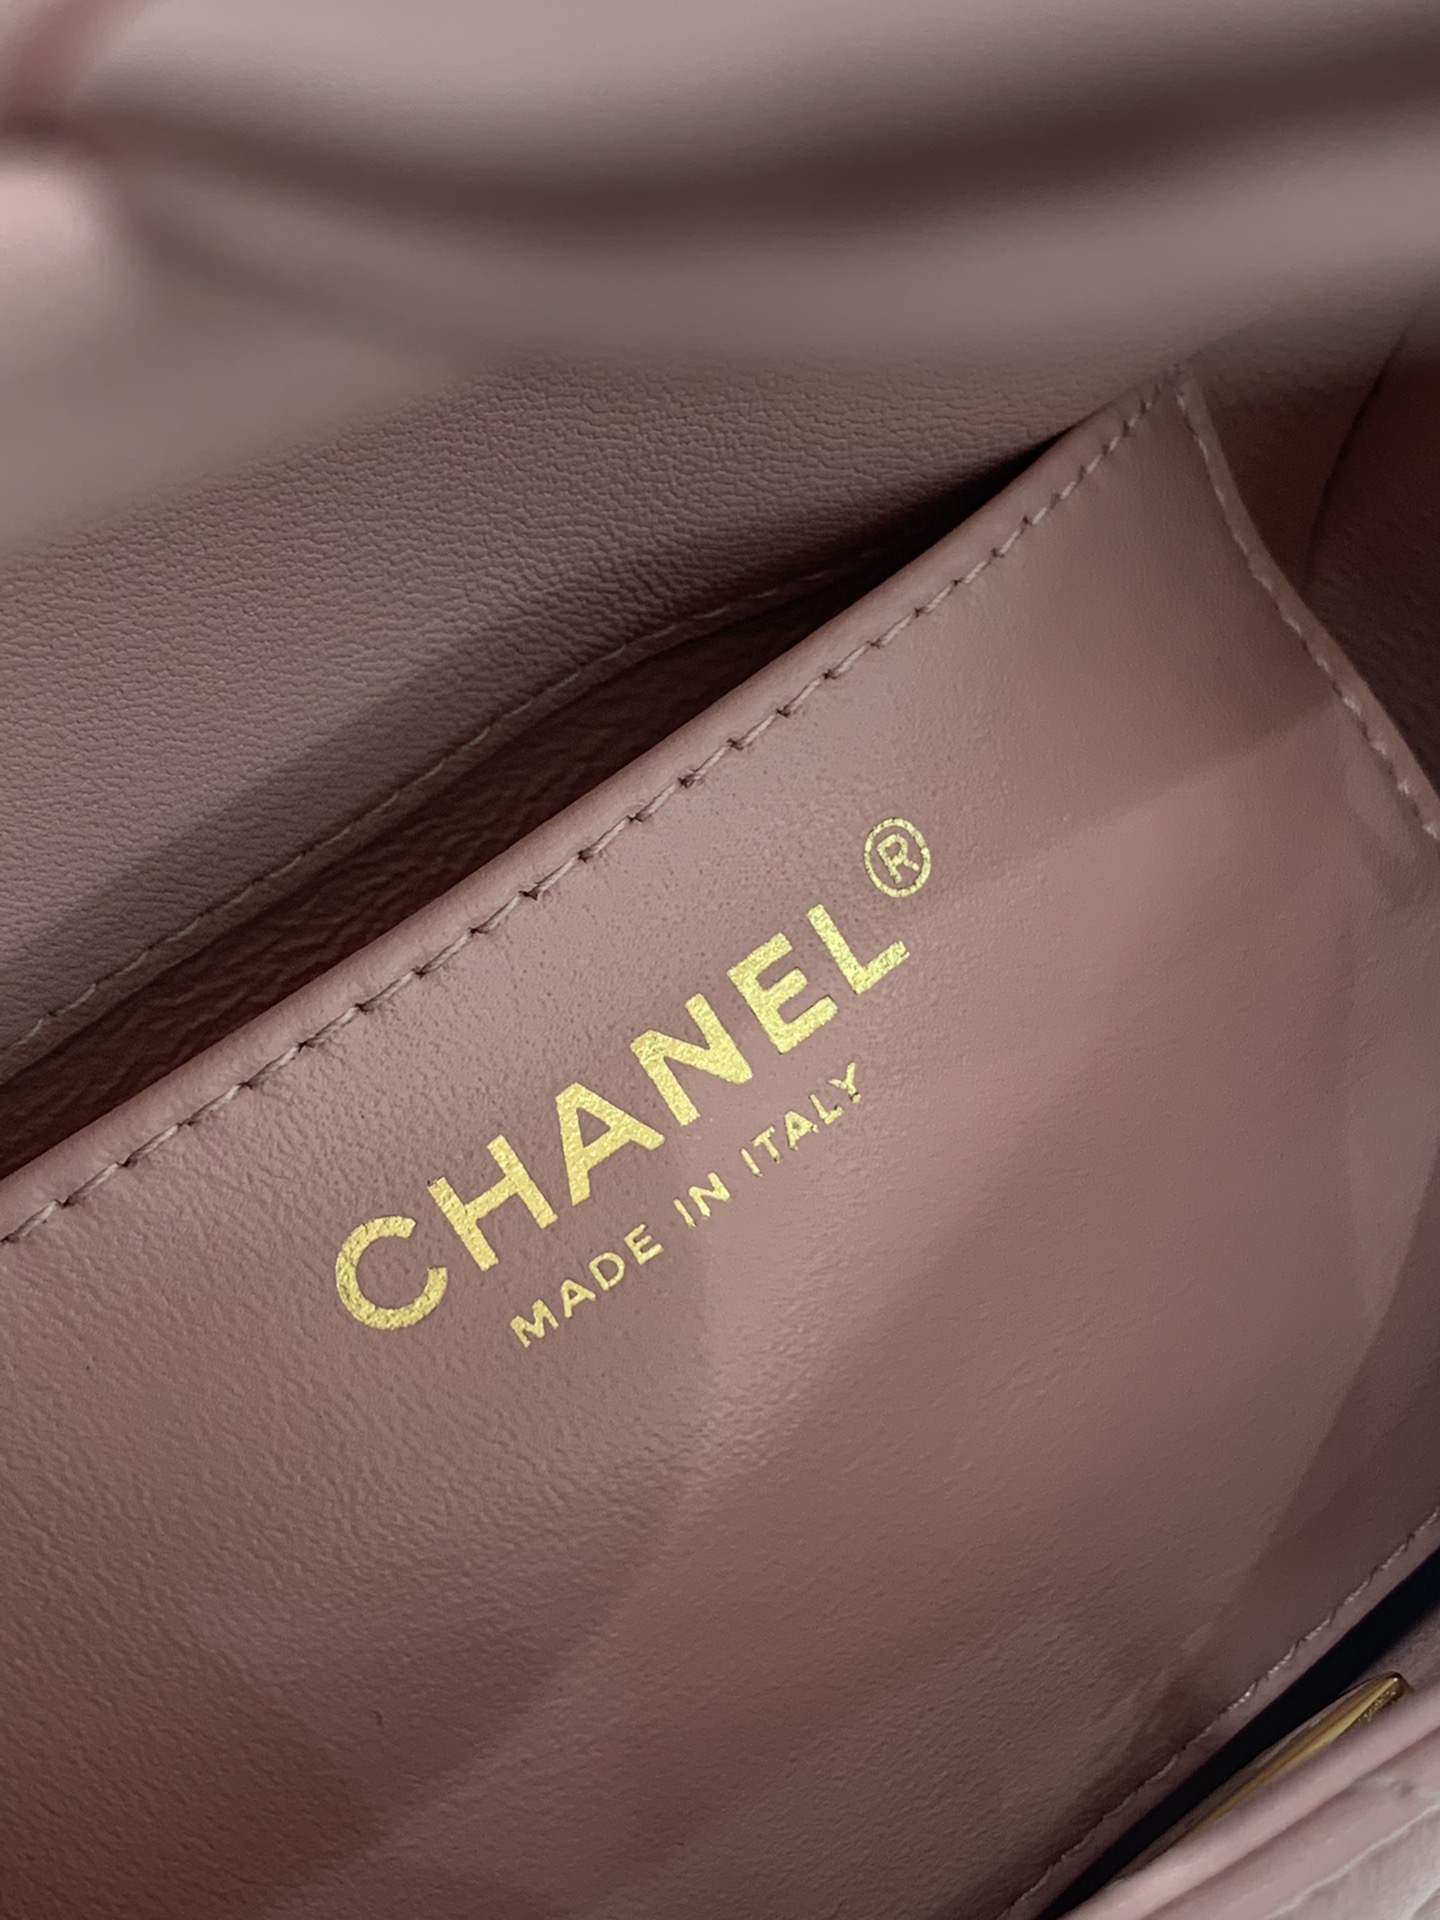 Chanel 上新啦 唯一的限量版 爱心链条mini cf cf经典版型加上爱心吊坠 18cm